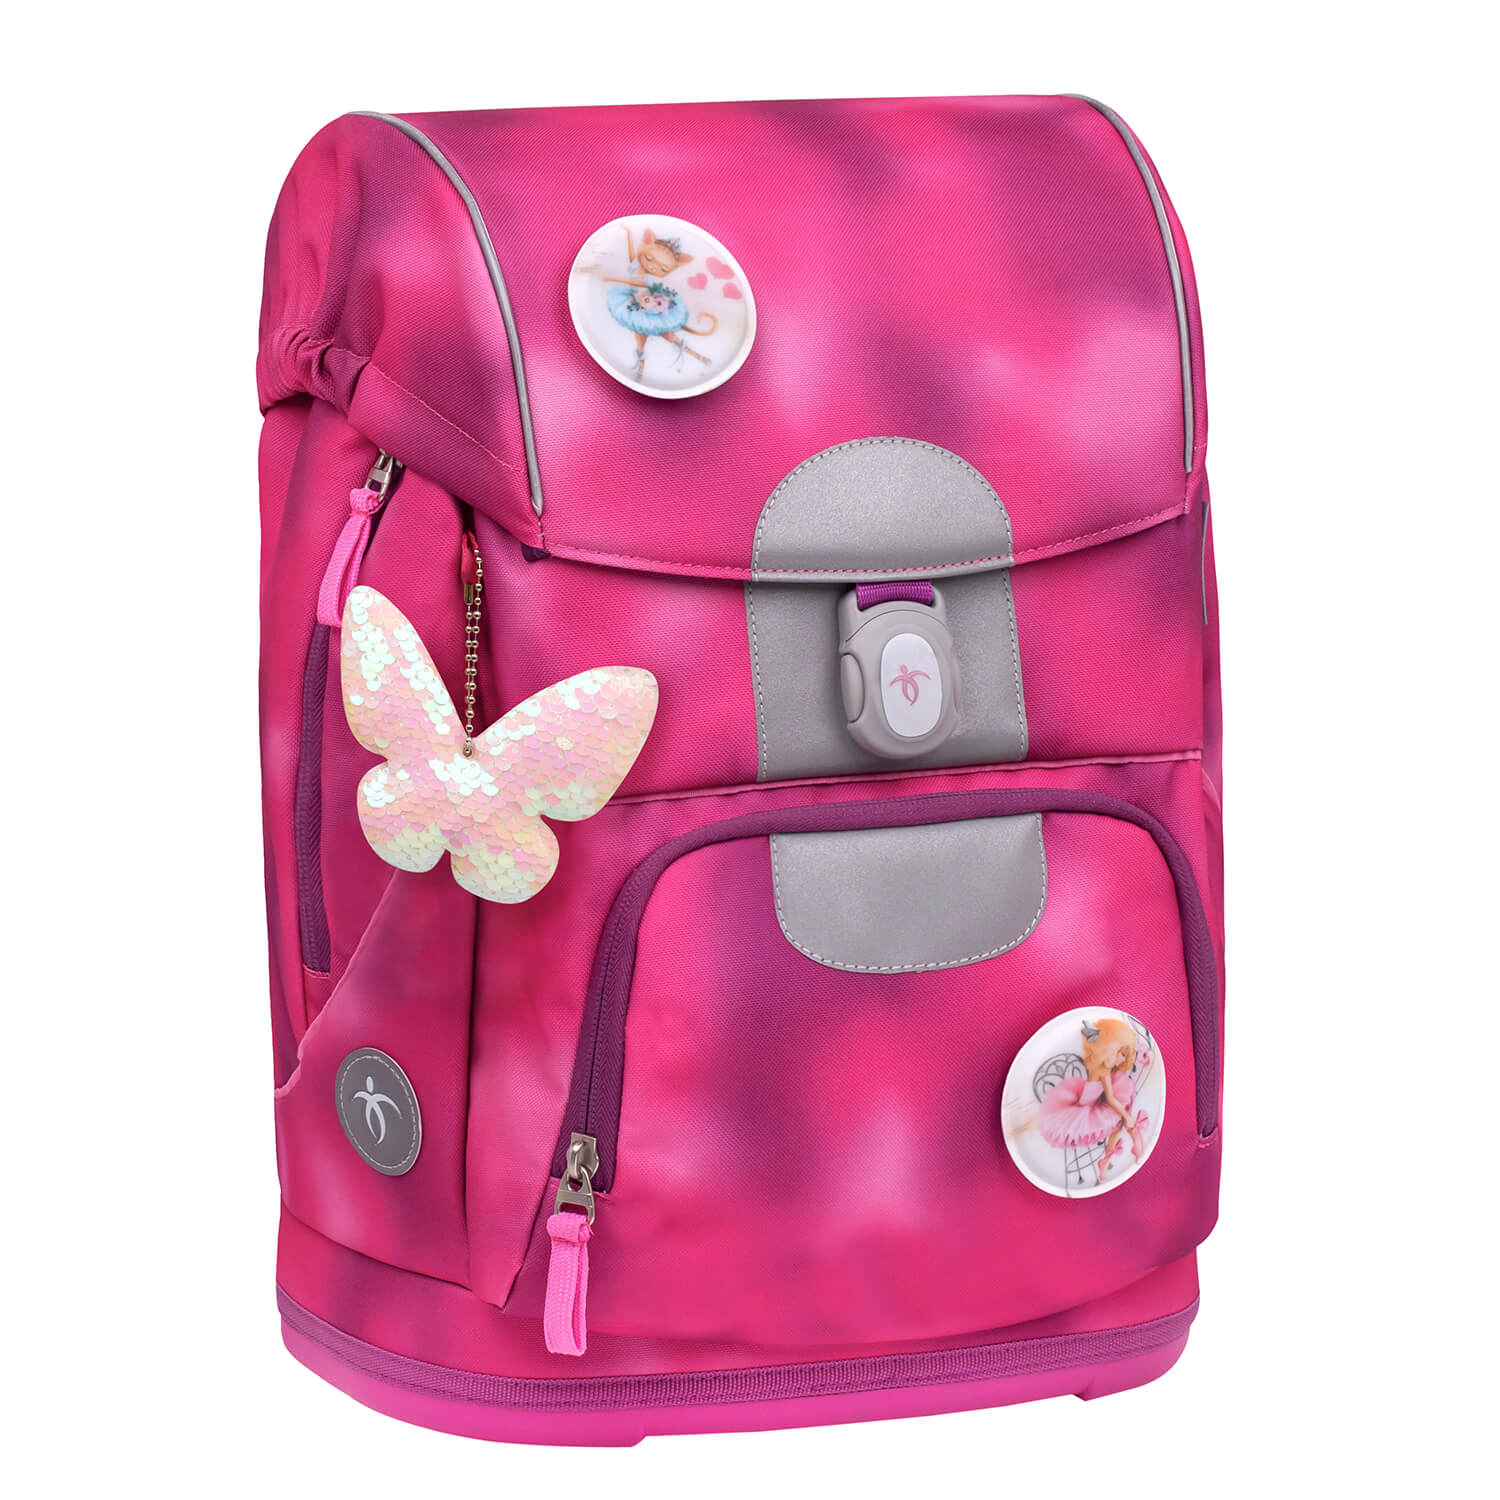 Motion Shiny Pink schoolbag set 5 pcs